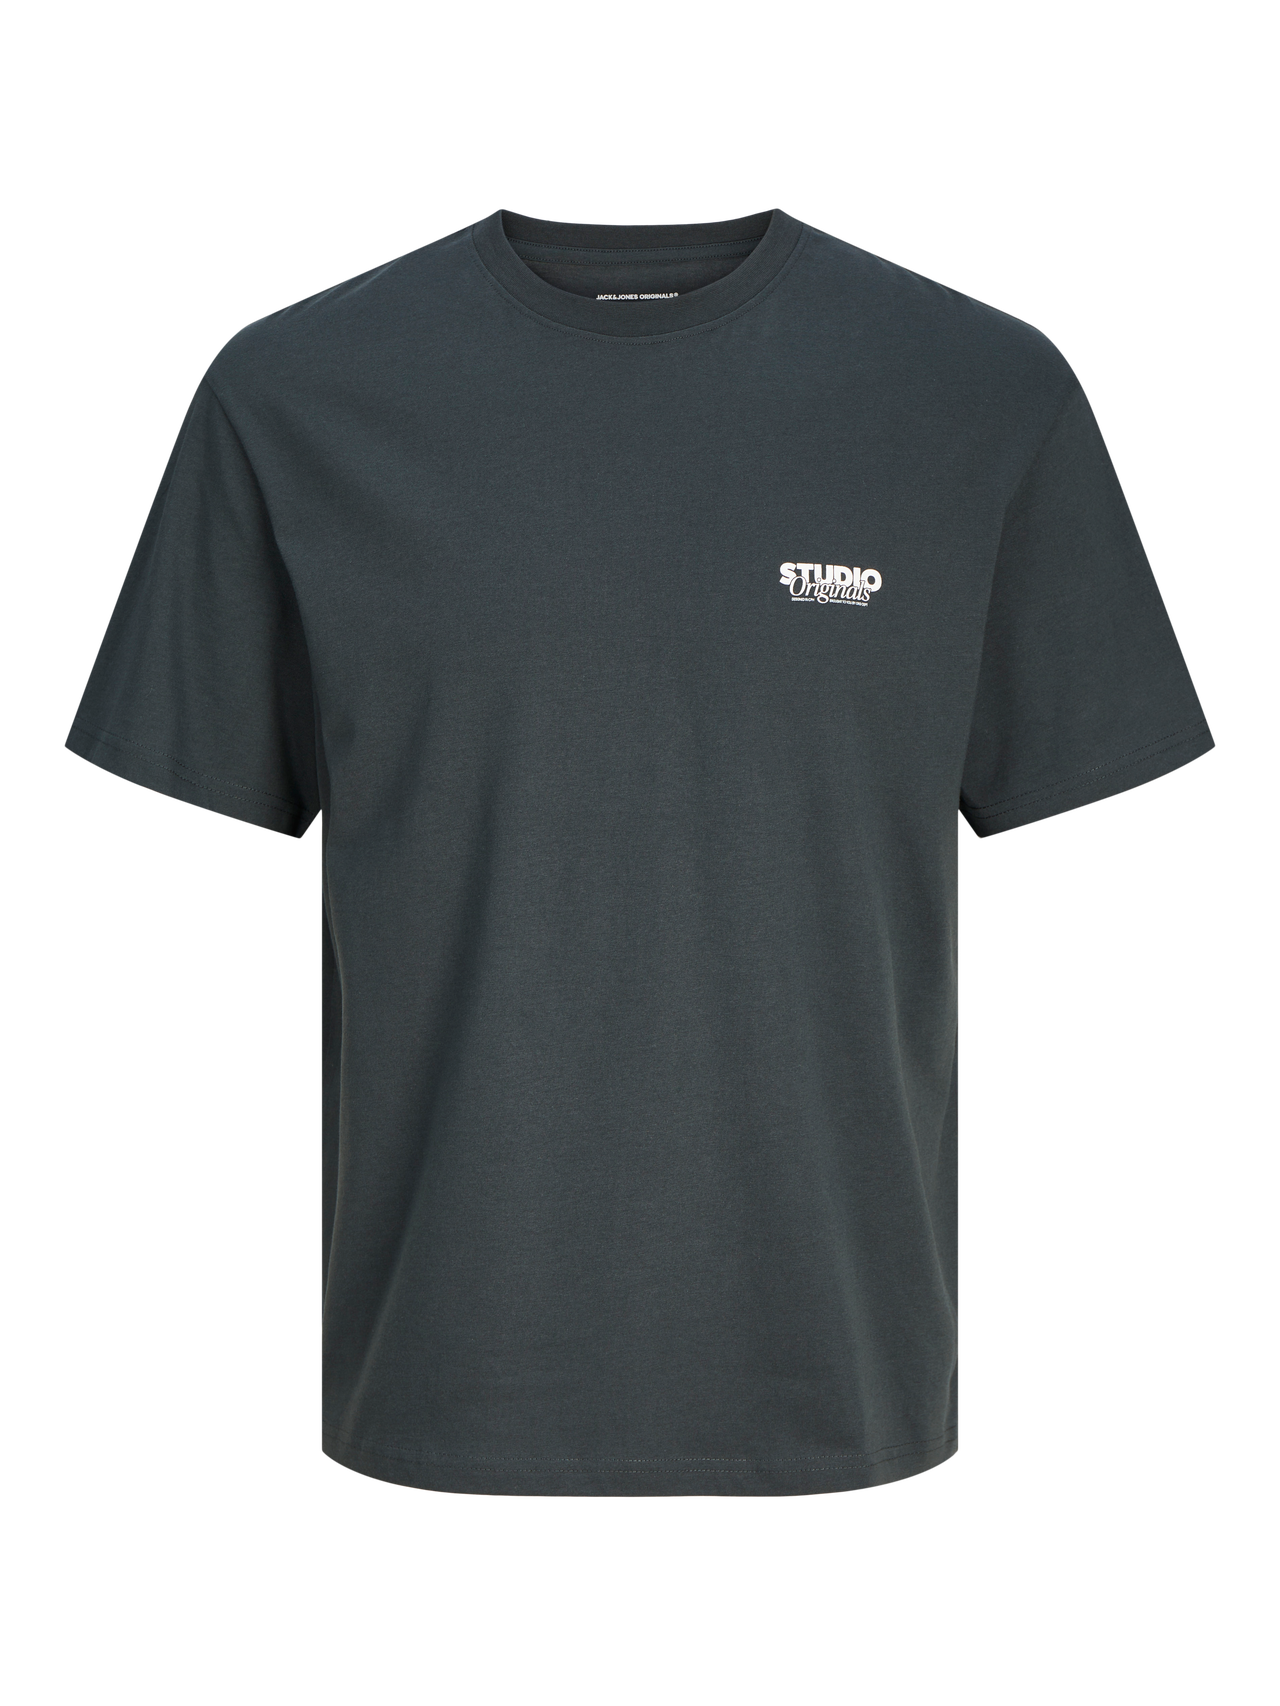 Jack & Jones T-shirt Estampar Decote Redondo -Forest River - 12240122